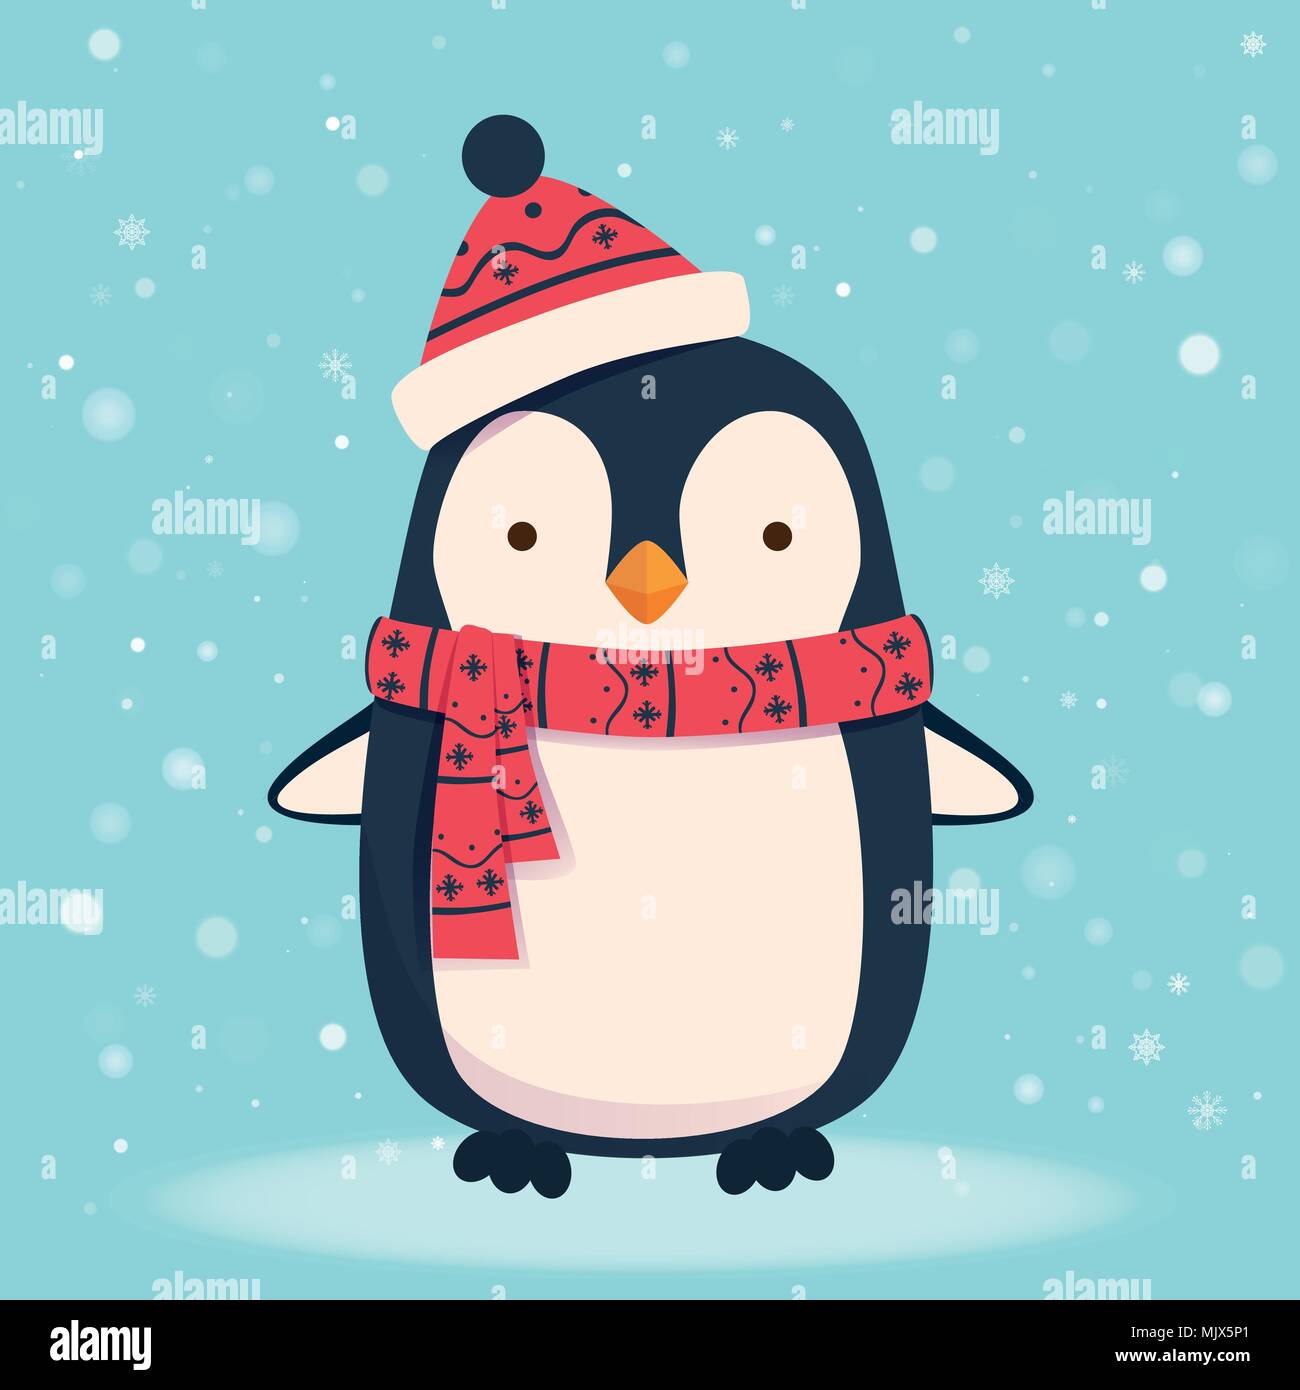 penguin cartoon illustration Stock Vector